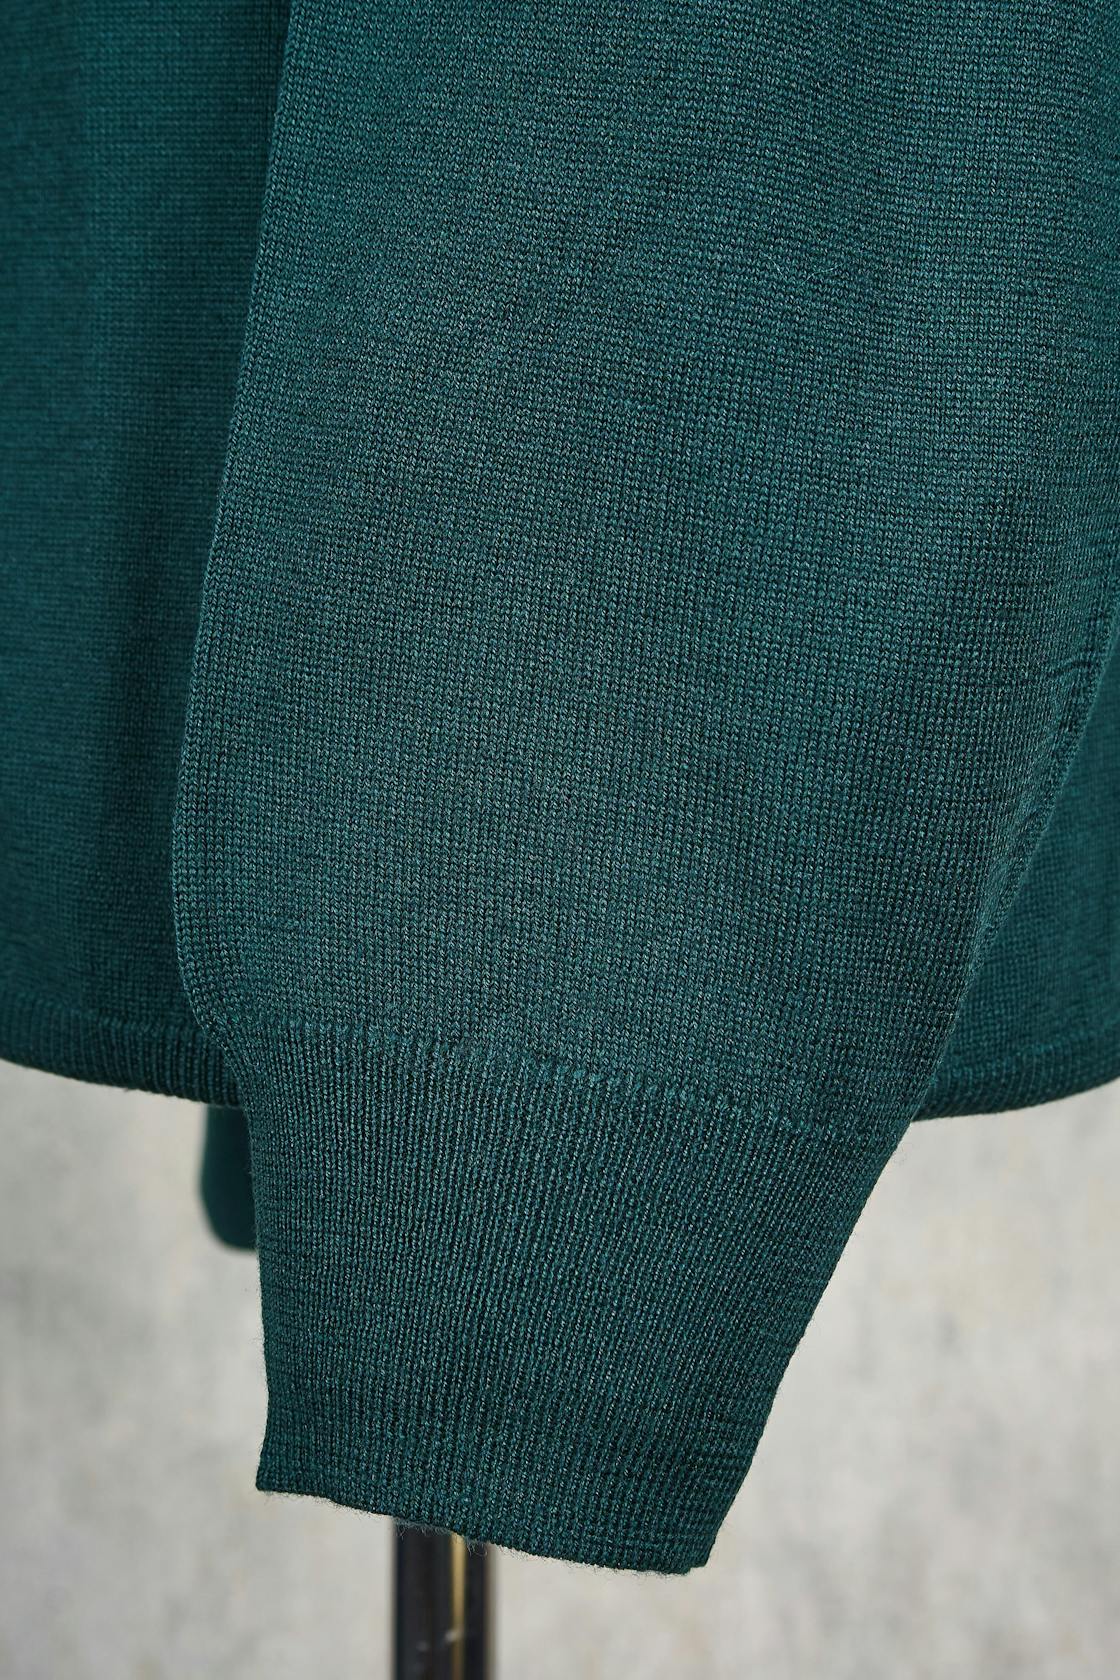 Ascot Chang Green Extra-Fine Merino Wool Round Neck Sweater